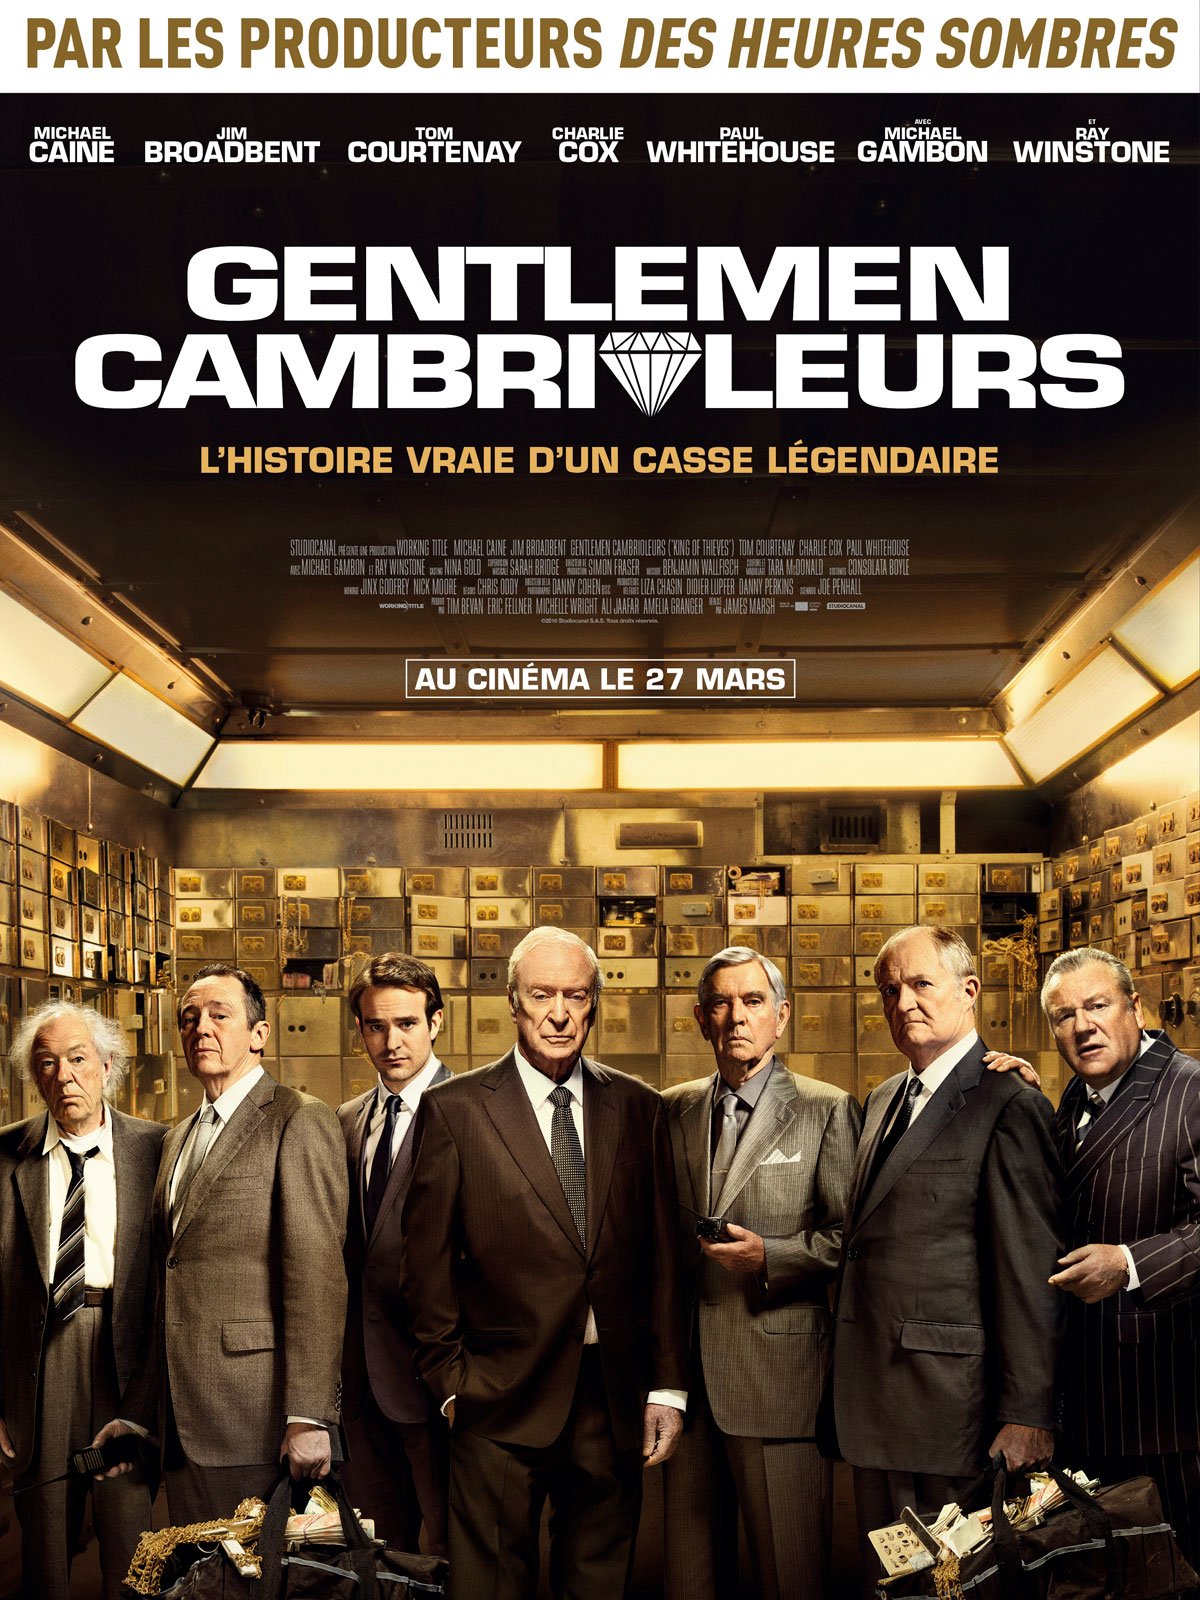 Gentlemen cambrioleurs - film 2018 - AlloCiné